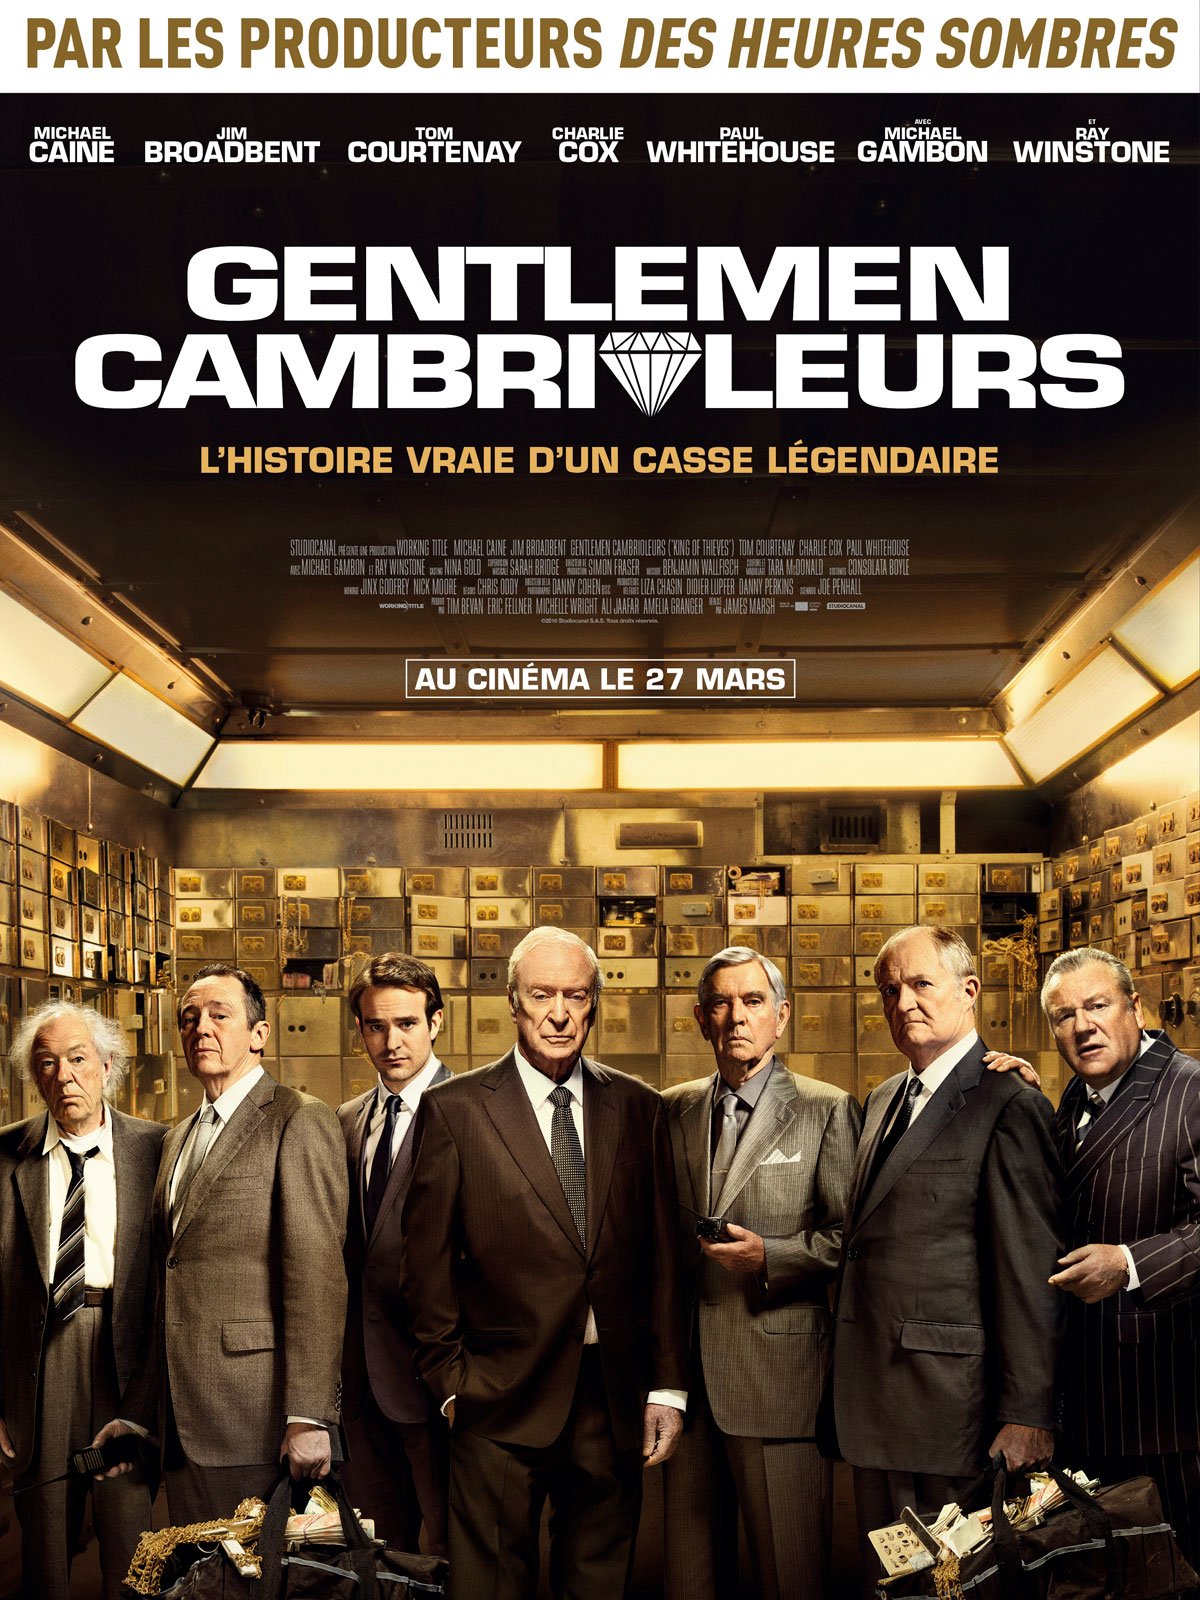 Gentlemen cambrioleurs - film 2018 - AlloCiné